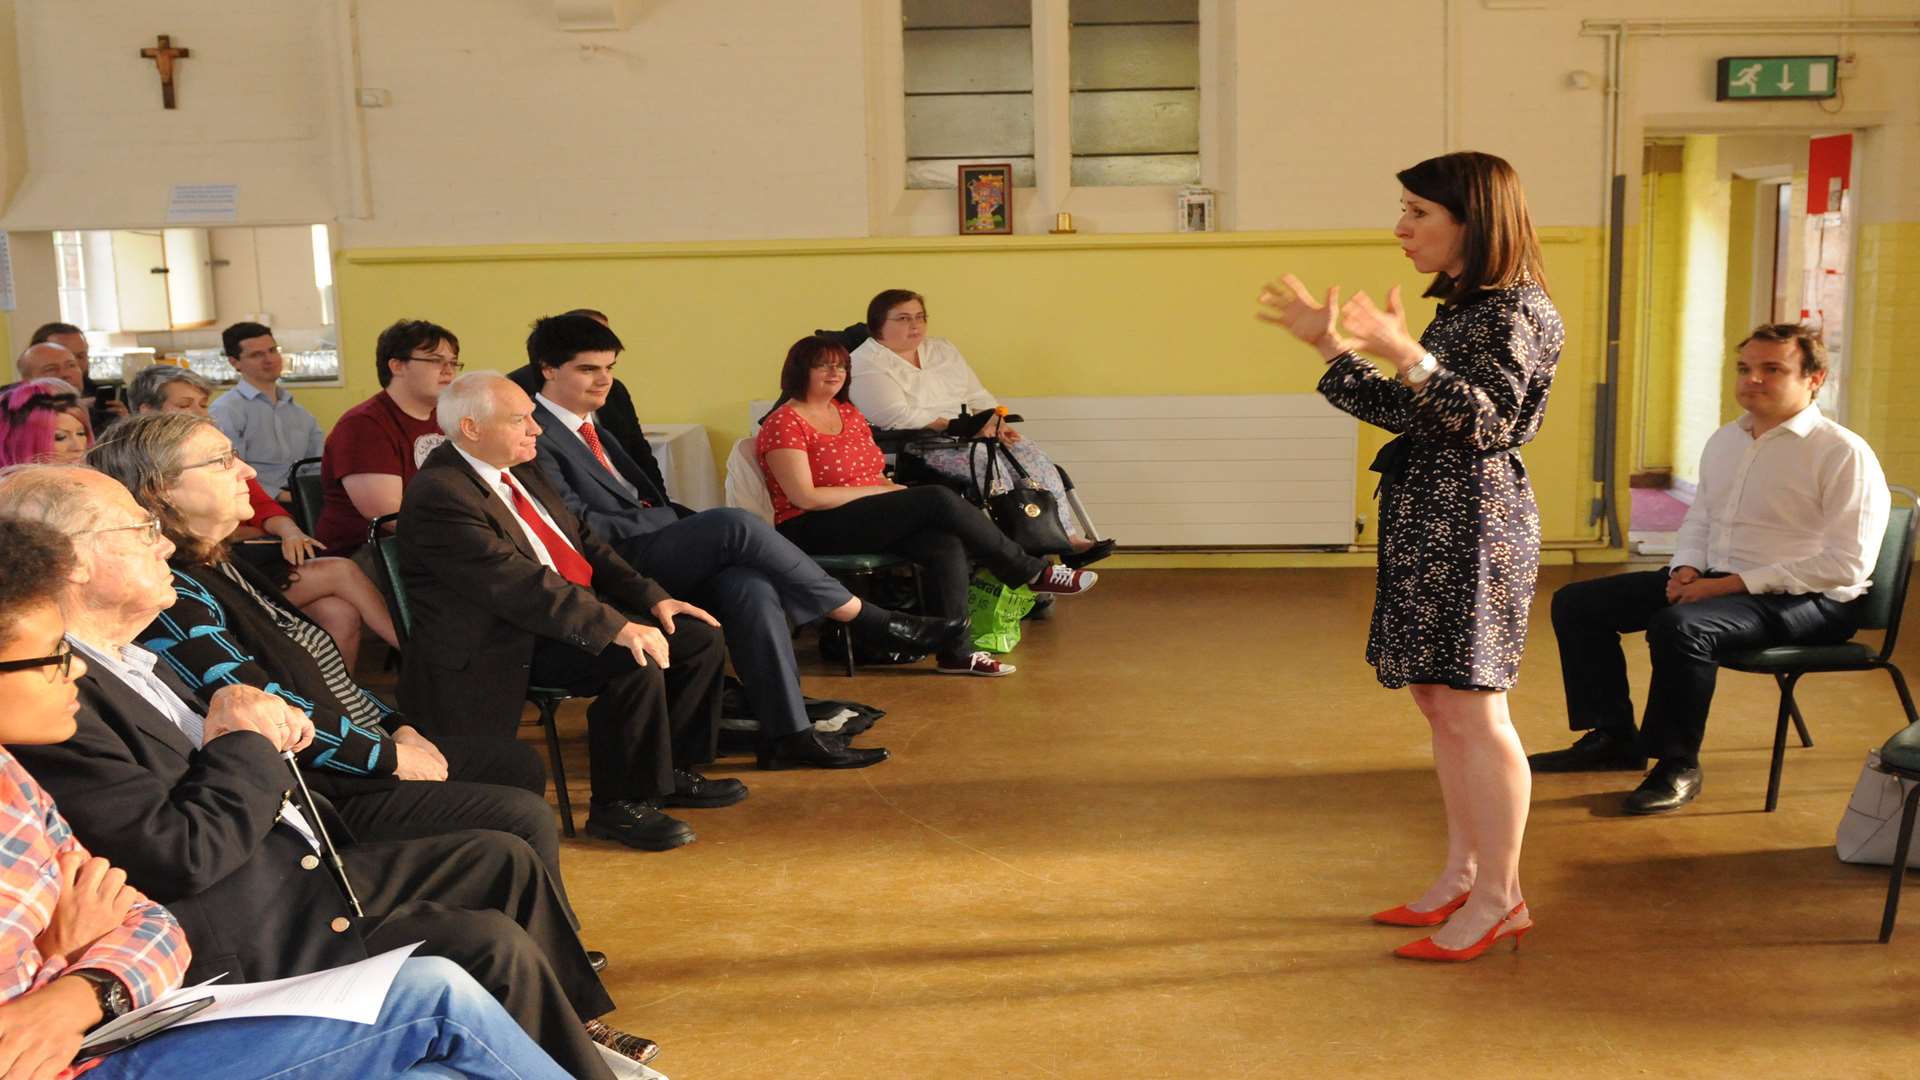 Labour Leadership contender Liz Kendall visits Gillingham for Q&A Session